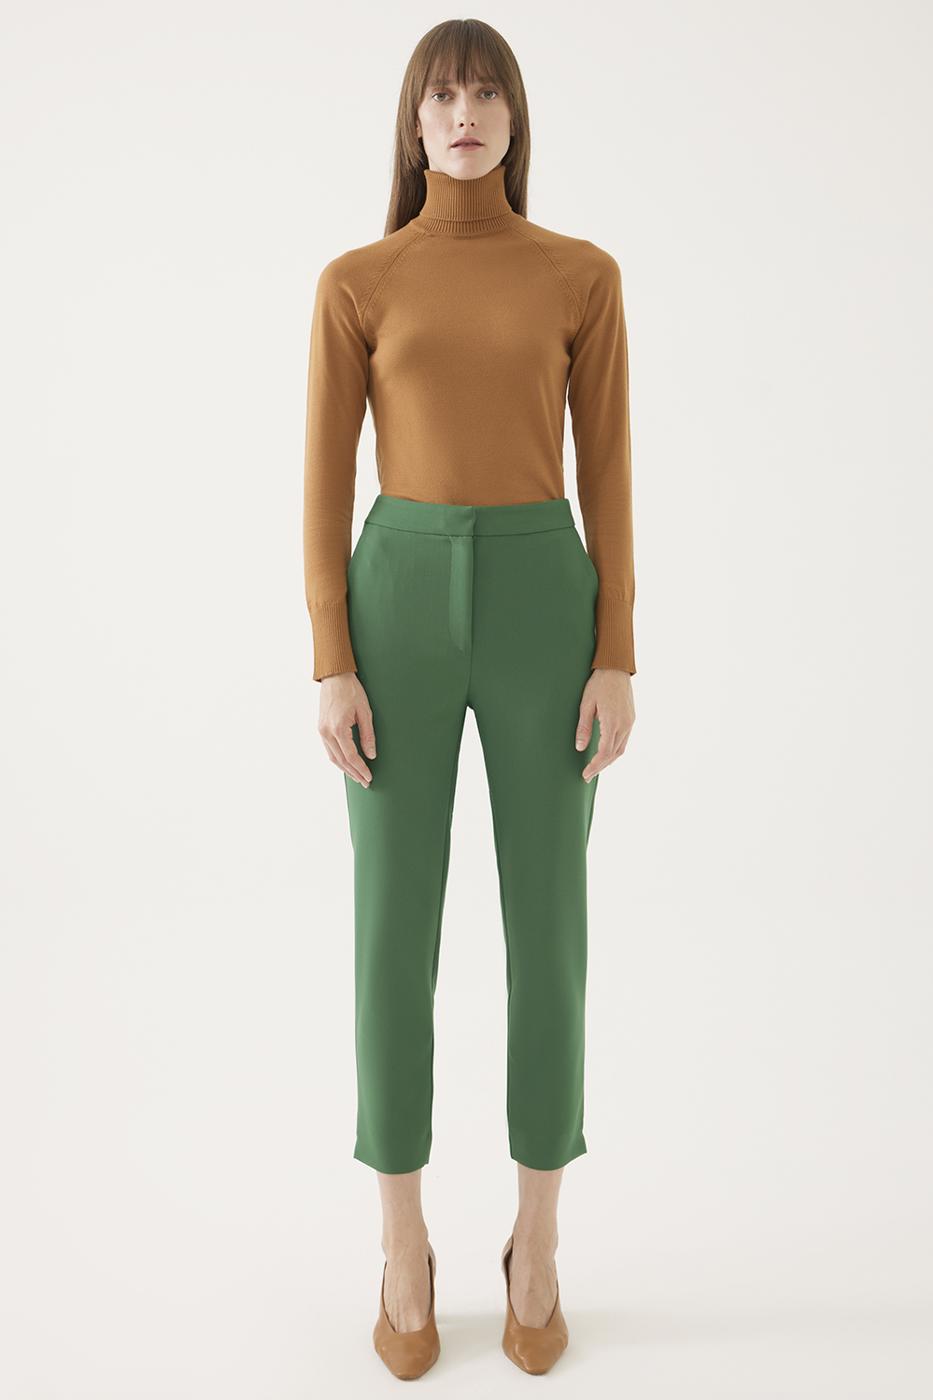 Bayan ZÜMRÜT YEŞİLİ İbbie Slim Fit Bilek Boy Boru Paça Zümrüt Yeşili Renk Kadın Pantolon